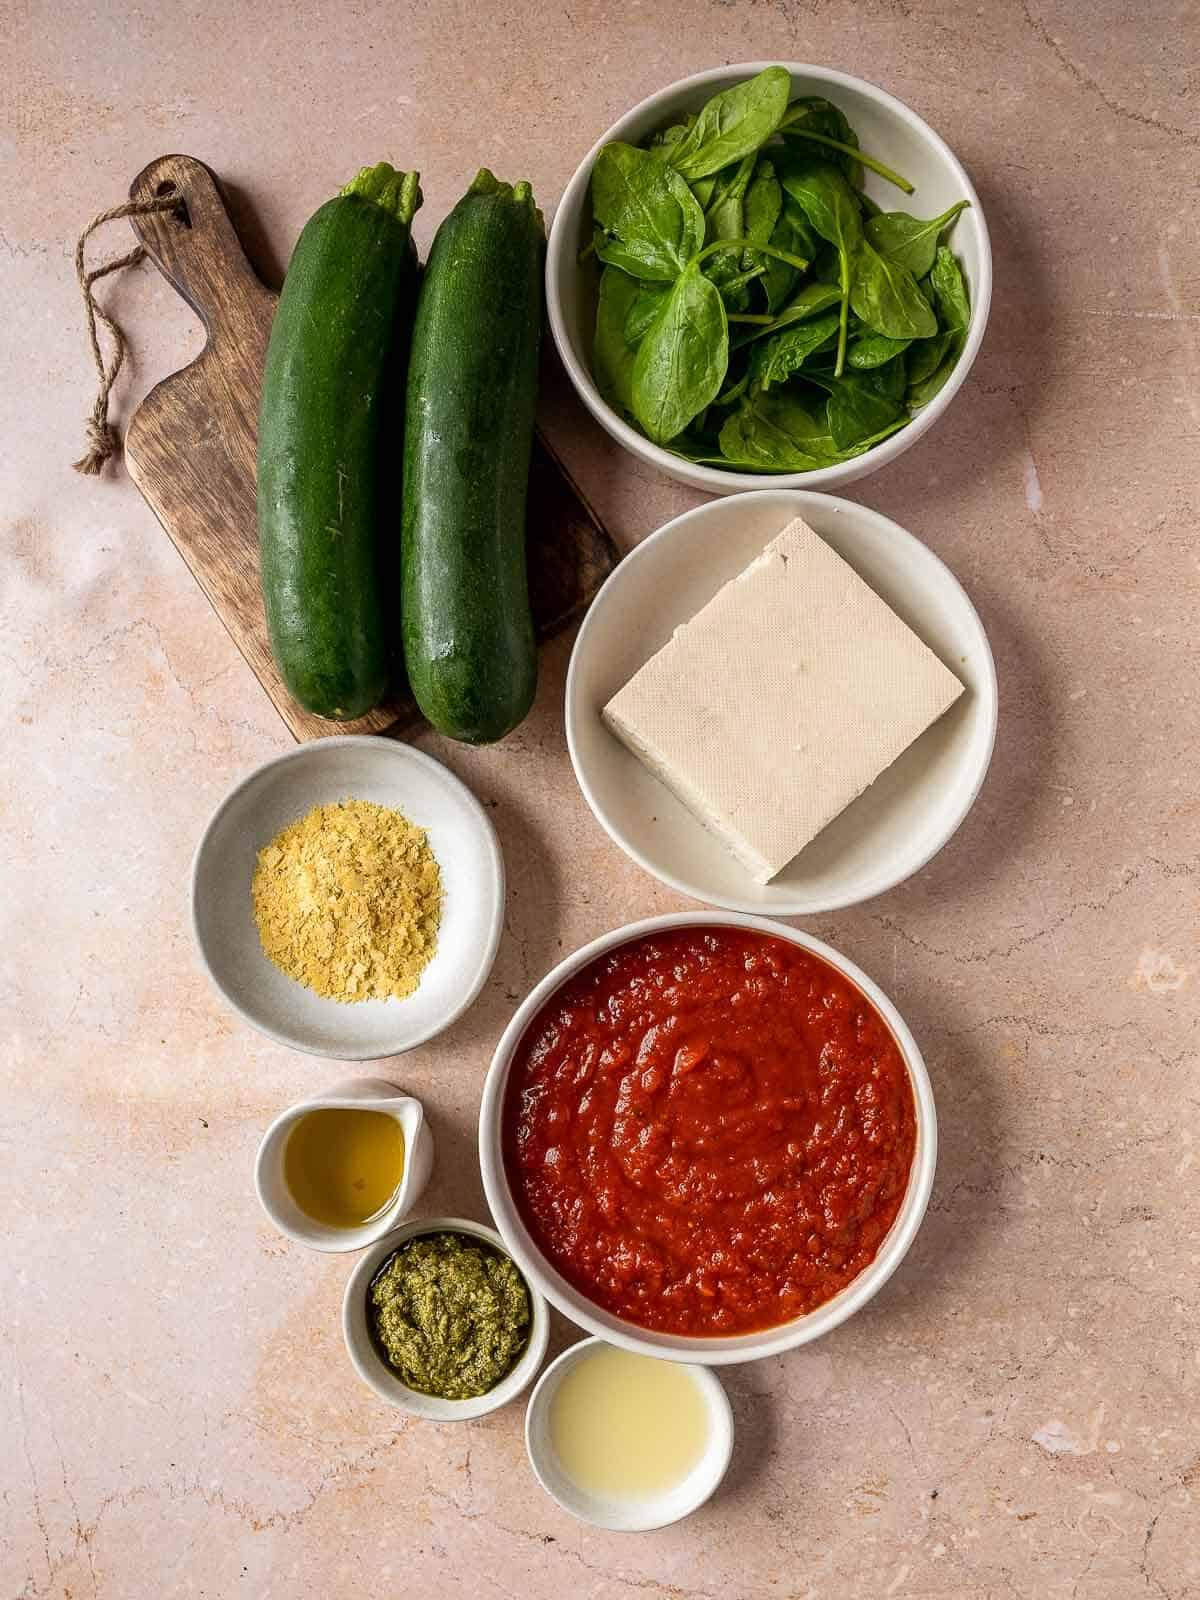 vegan gluten free lasagna ingredients on a table.